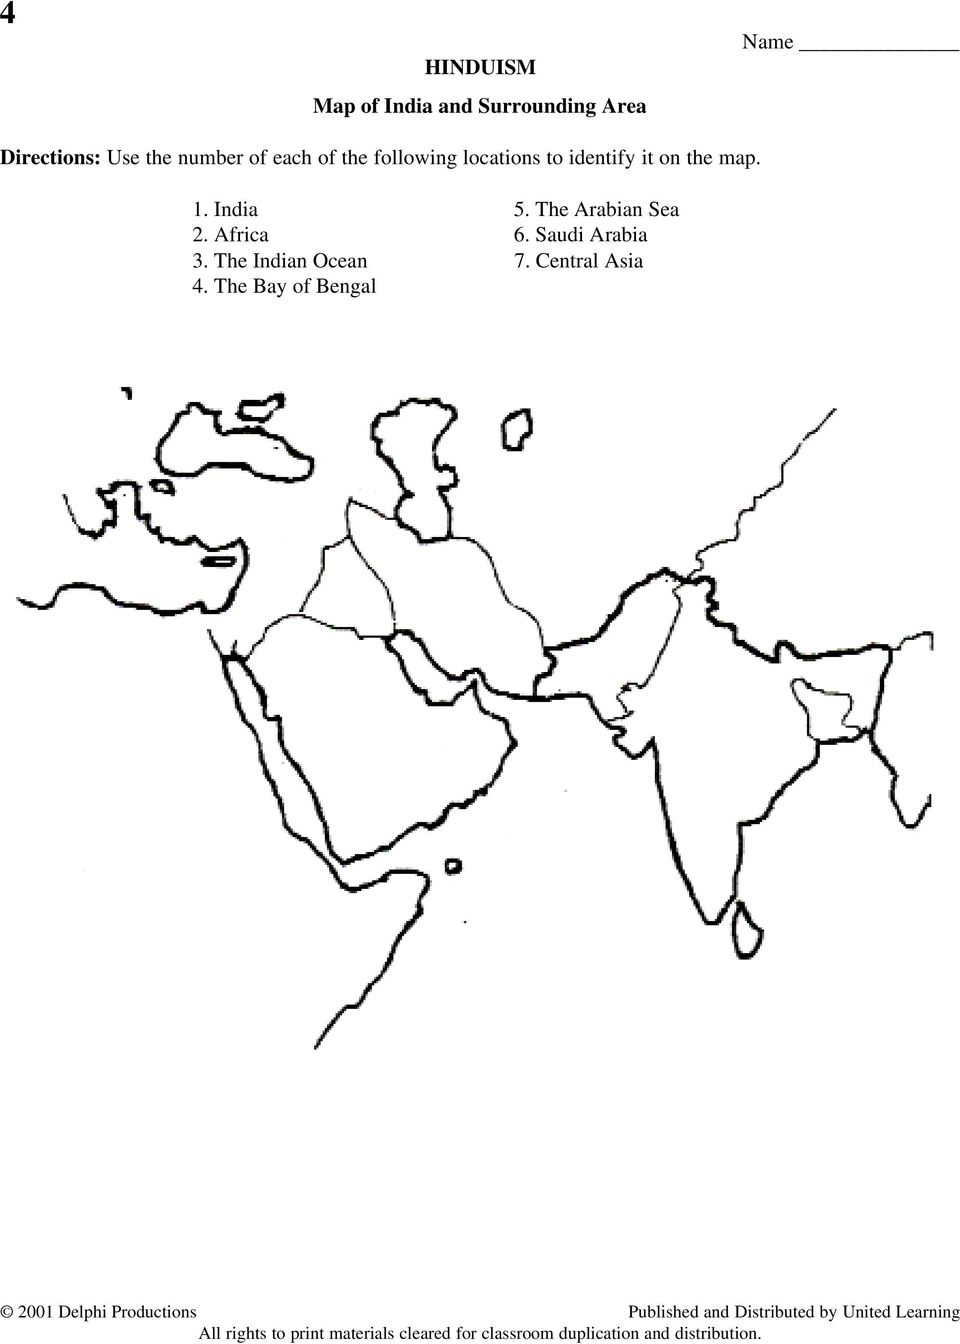 Saudi Arabia 3. The Indian Ocean 7. Central Asia 4.